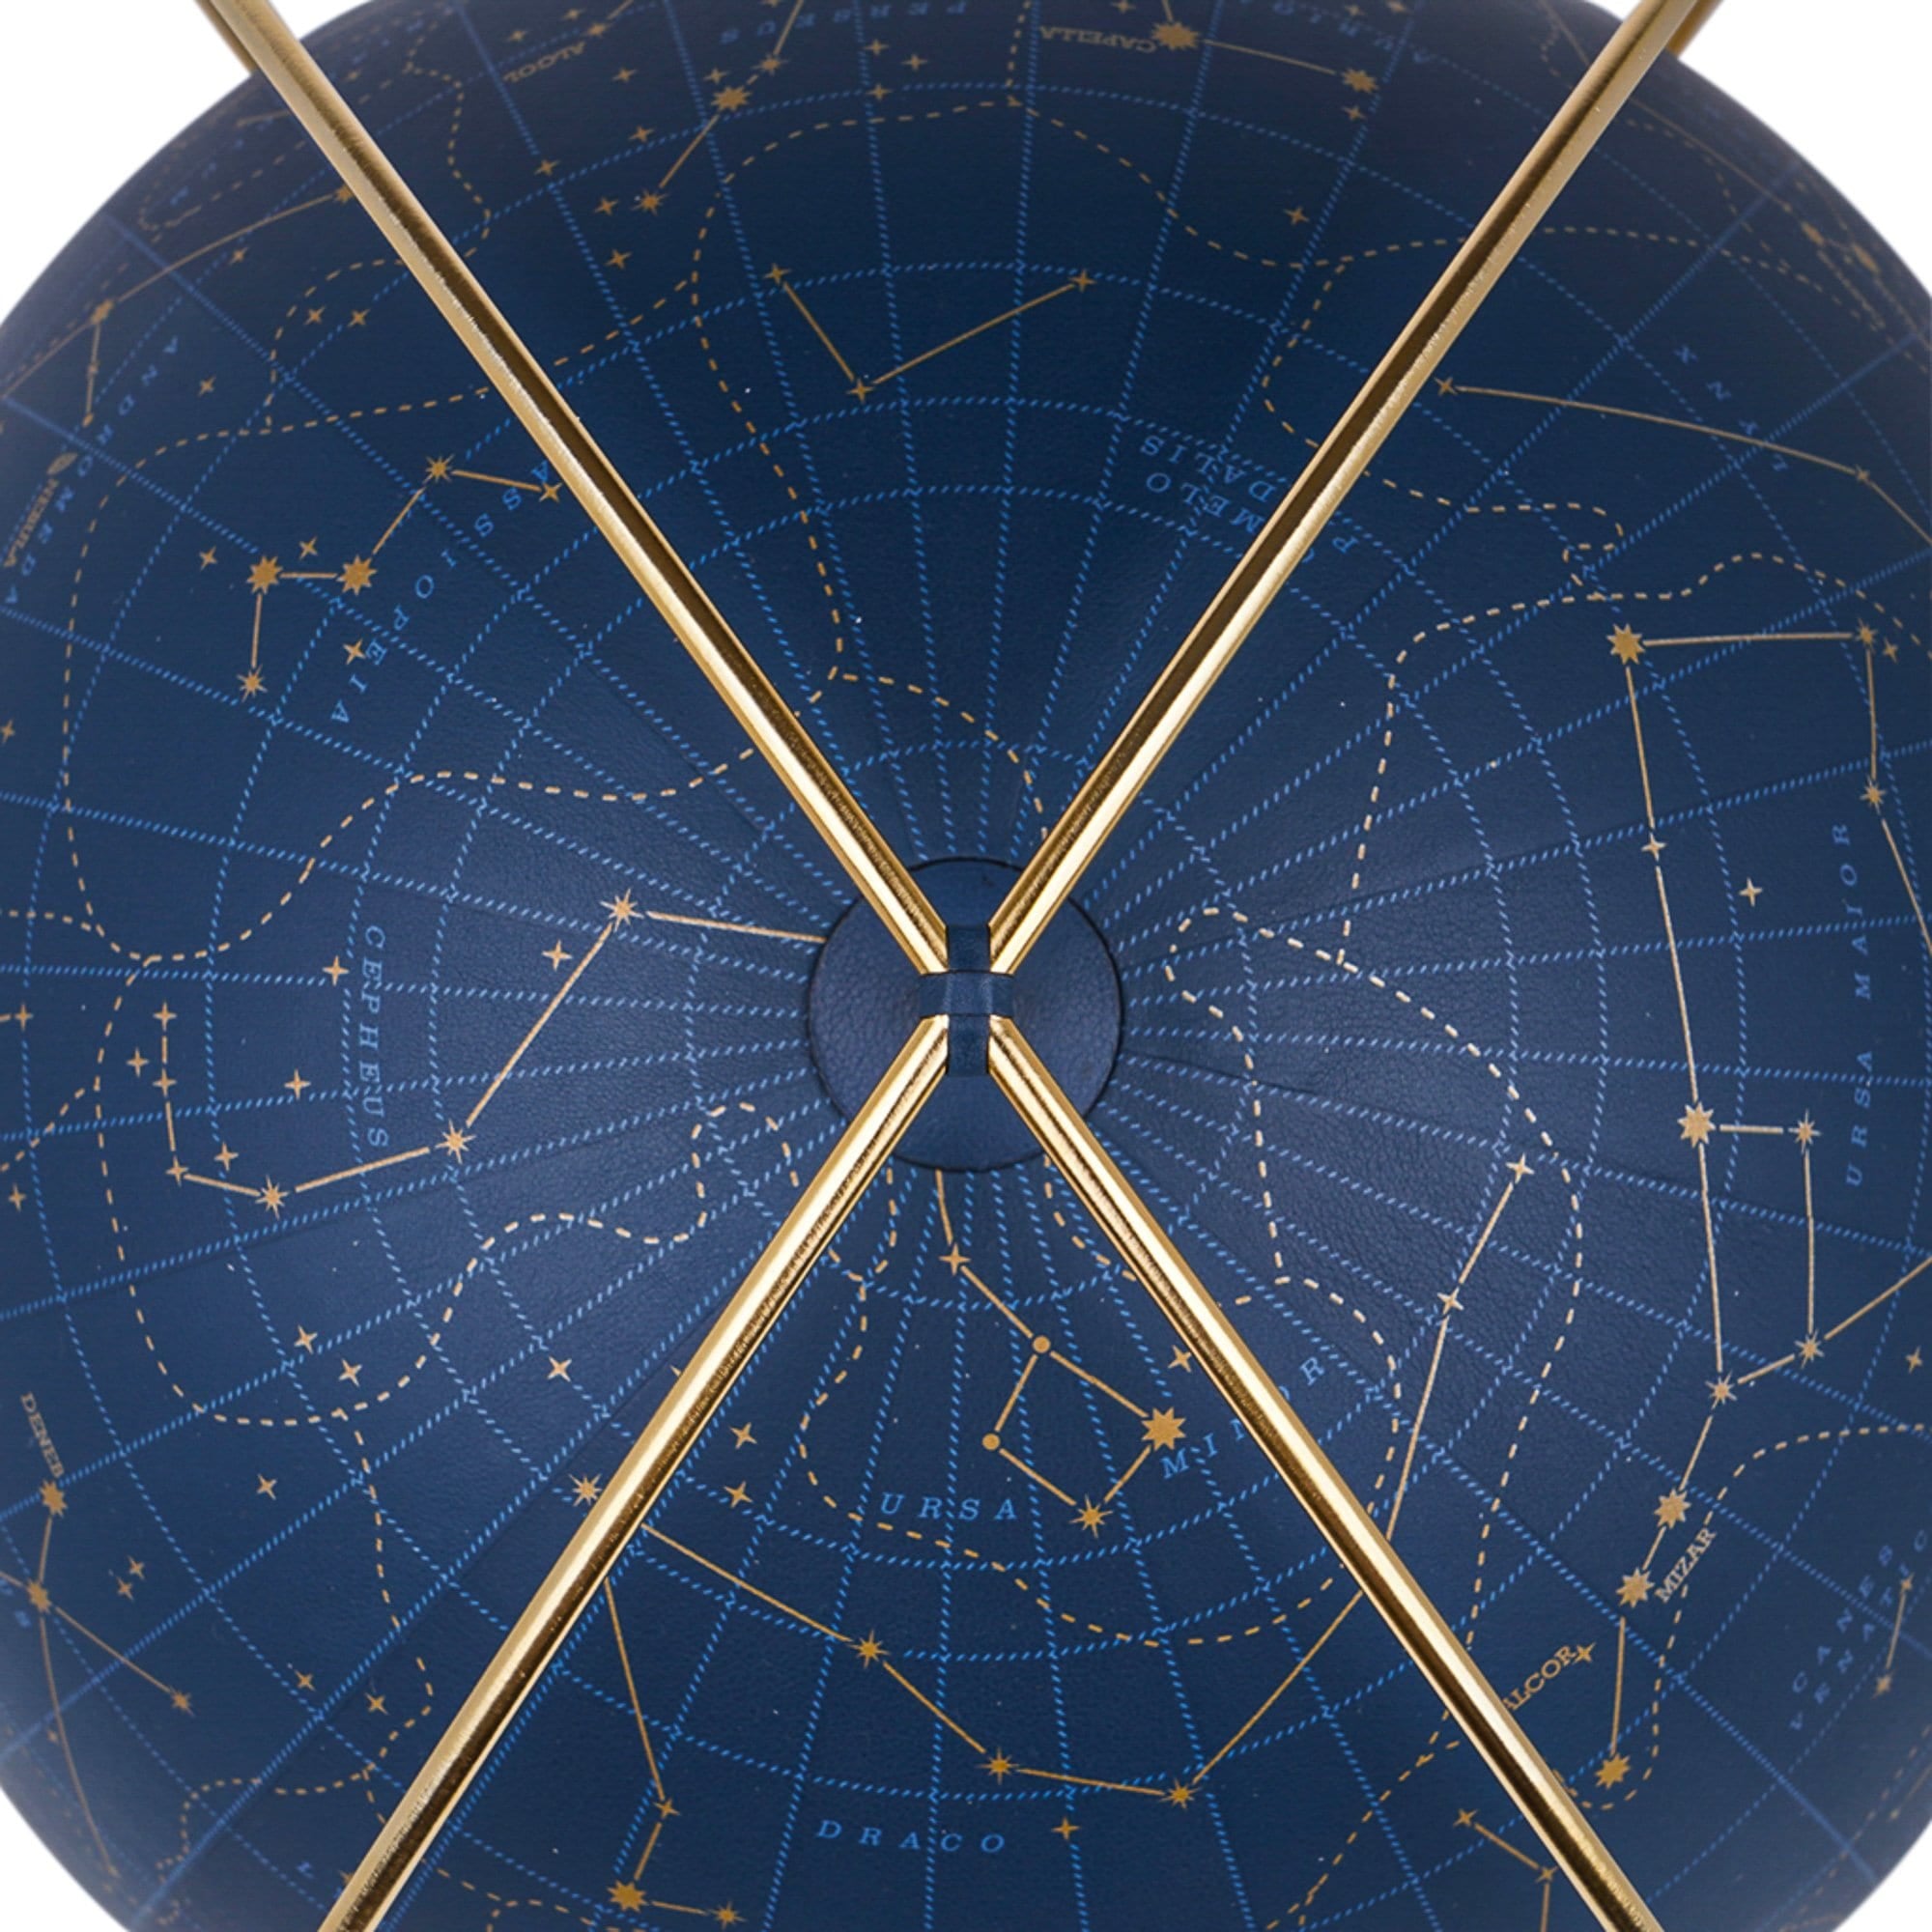 Hermes Apollo 24 Celestial Globe Blue de Prusse New w/Box